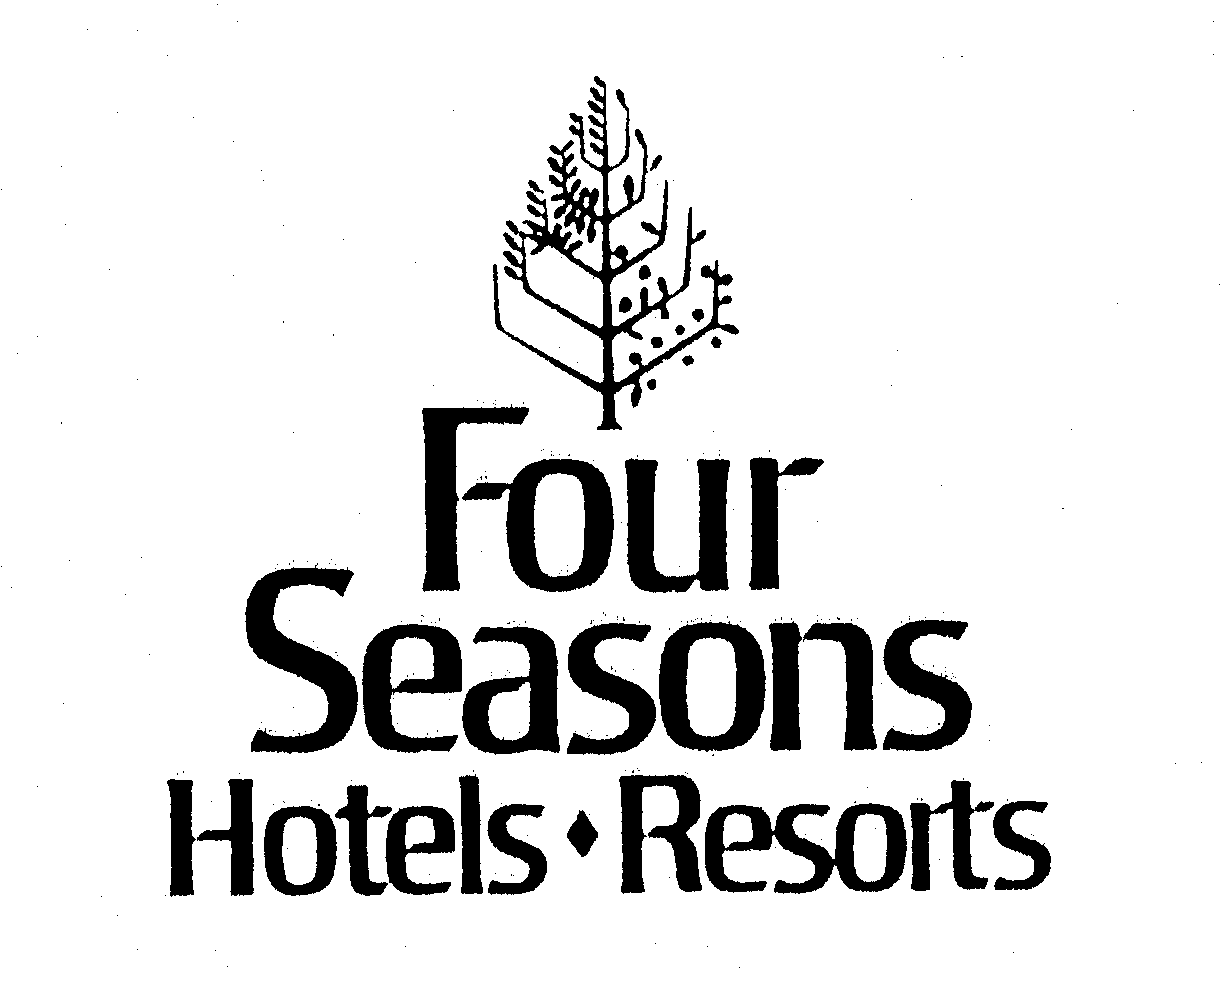  FOUR SEASONS HOTELS RESORTS